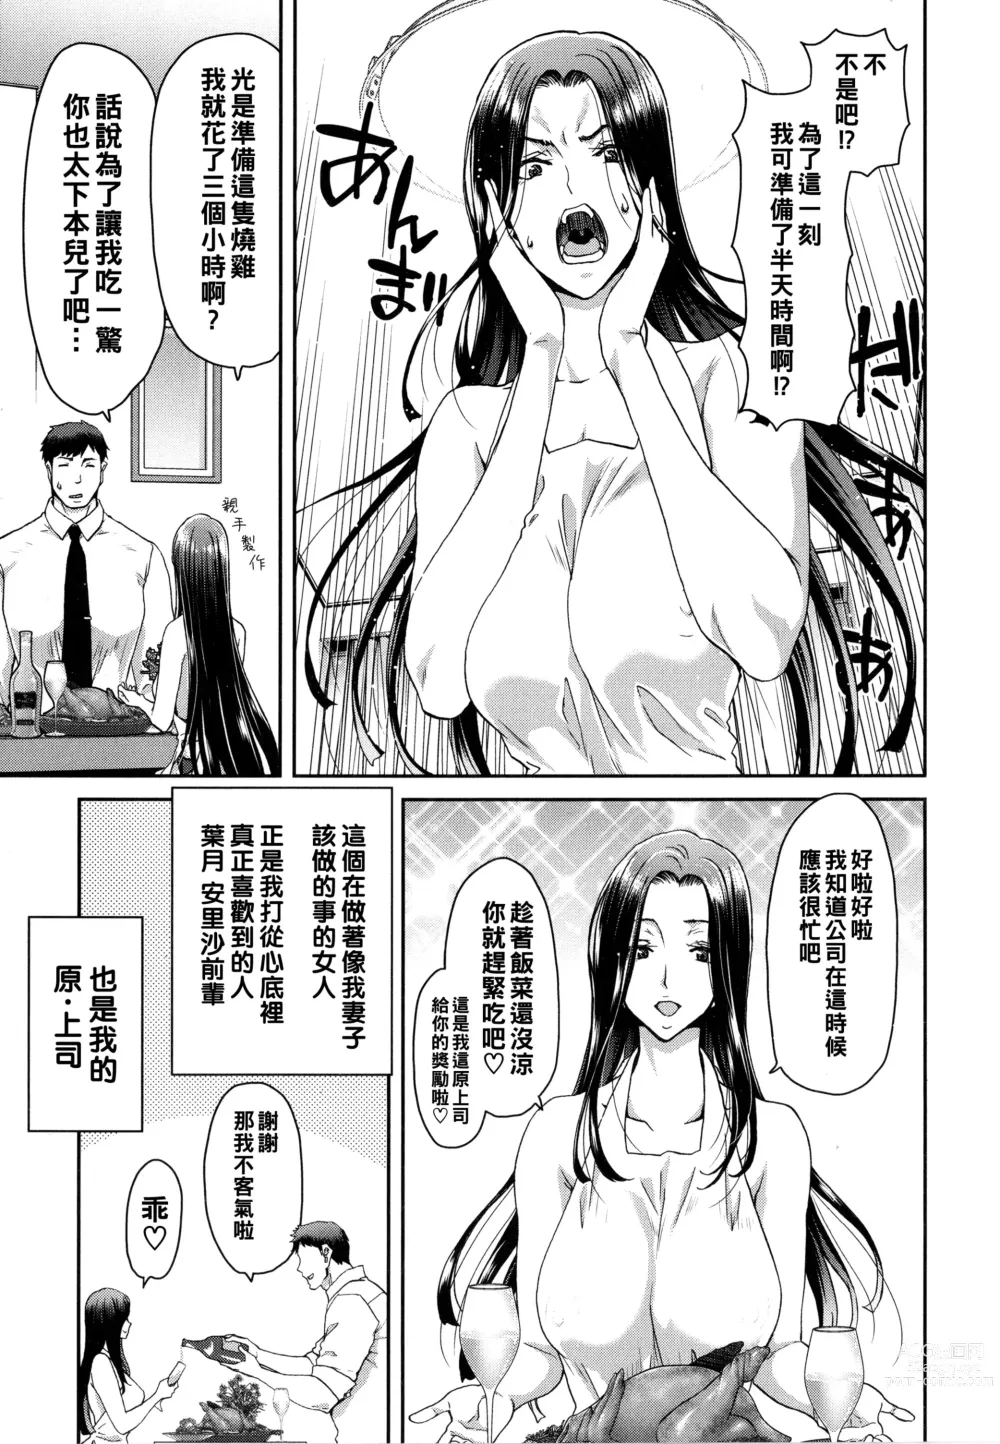 Page 7 of manga Iede Onna o Hirottara - When I picked up a runaway girl.